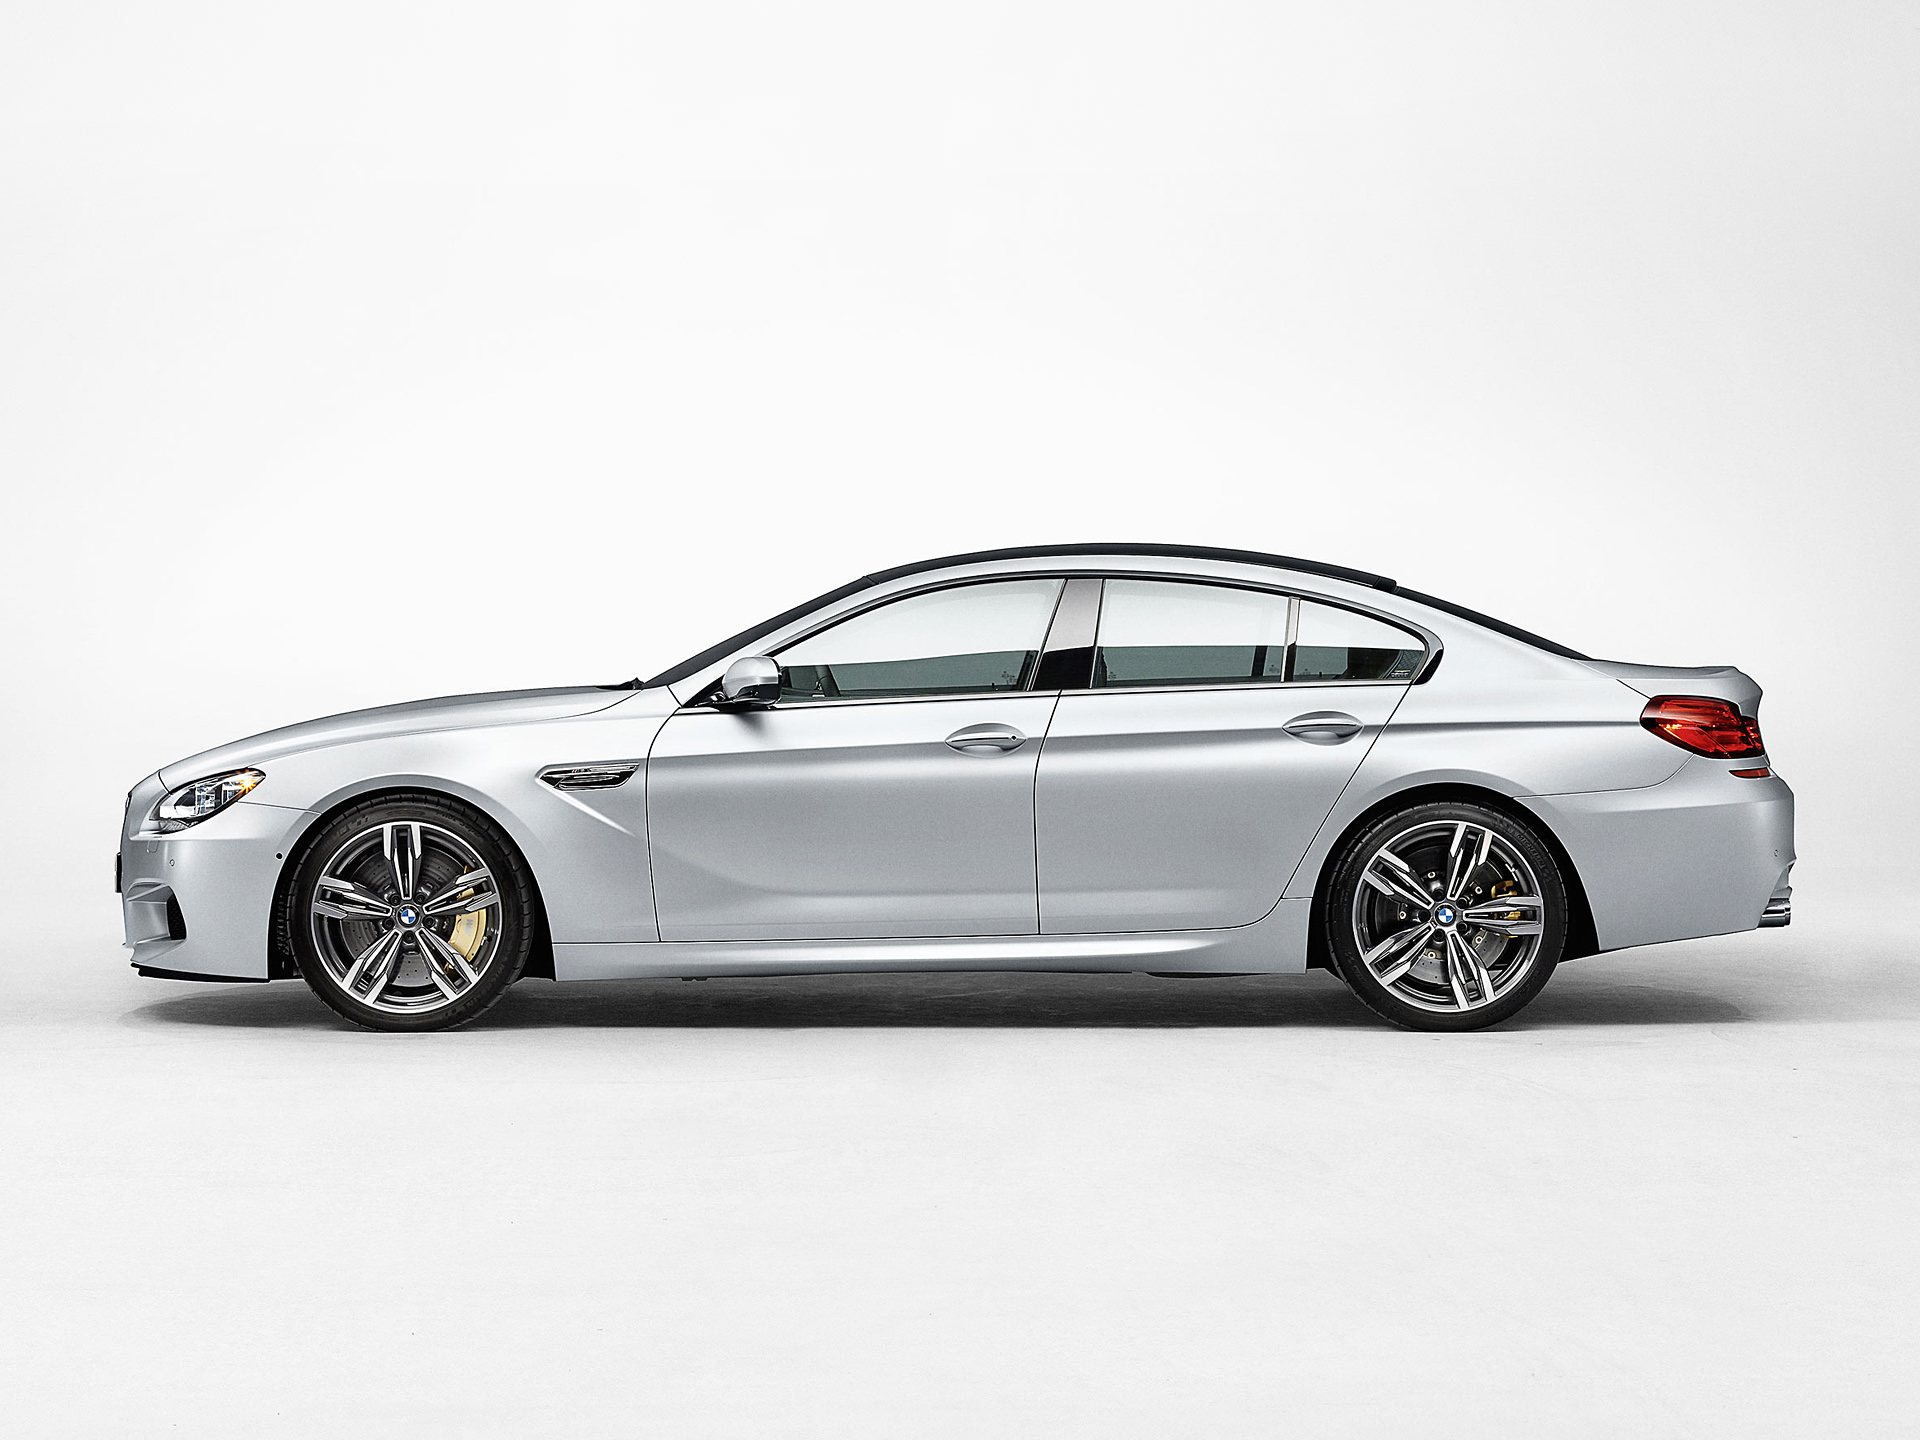 BMW M6 exterior - Side Profile